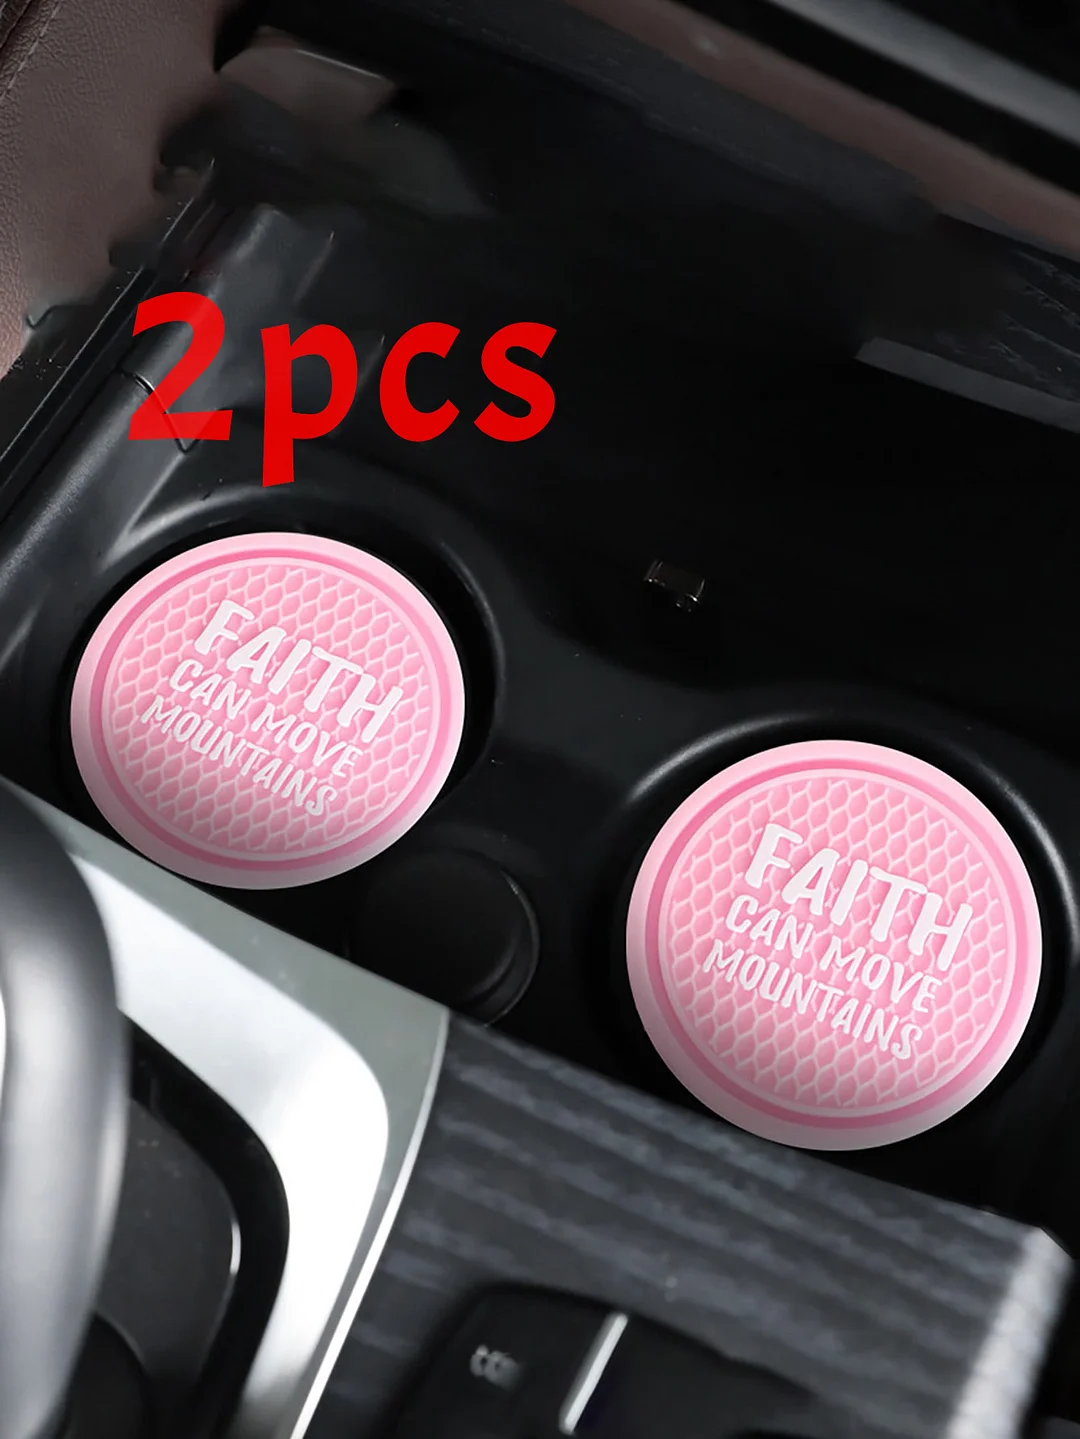 2pcs pink silicone car coasters, "faith can move mountains" cute creative coasters, non-slip waterproof car coasters, general purpose models